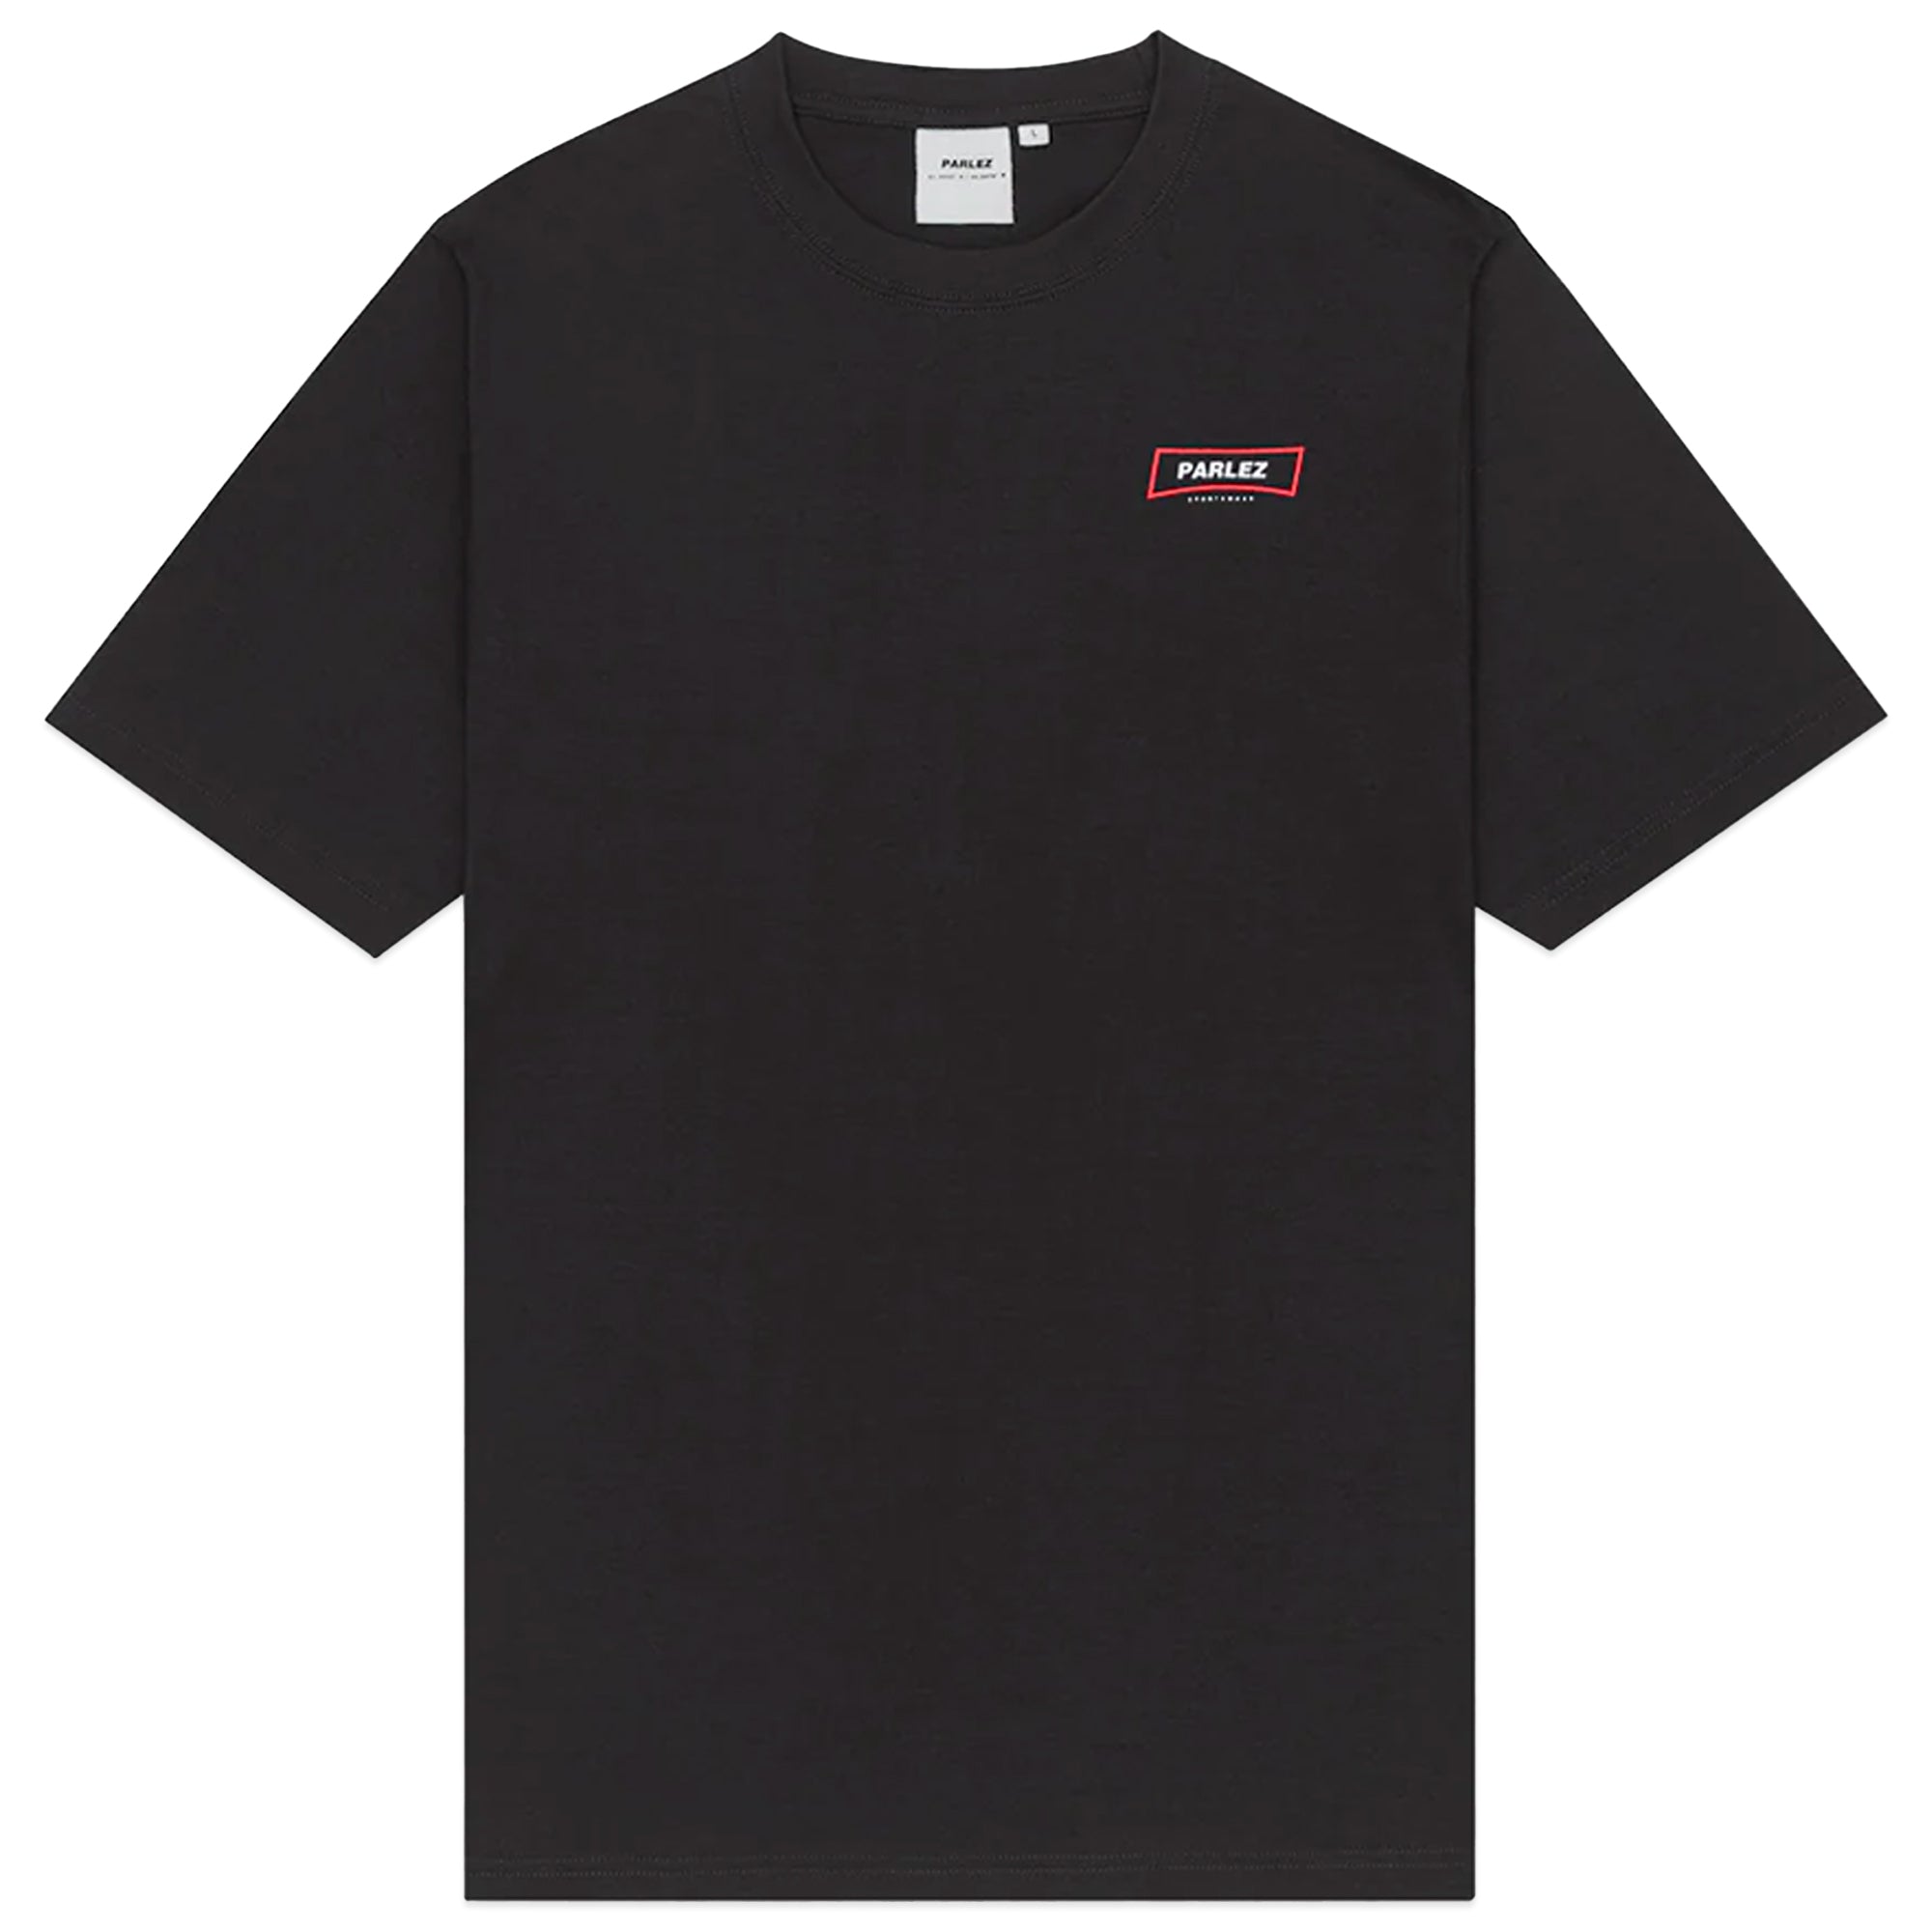 Parlez Downtown T-Shirt - Black